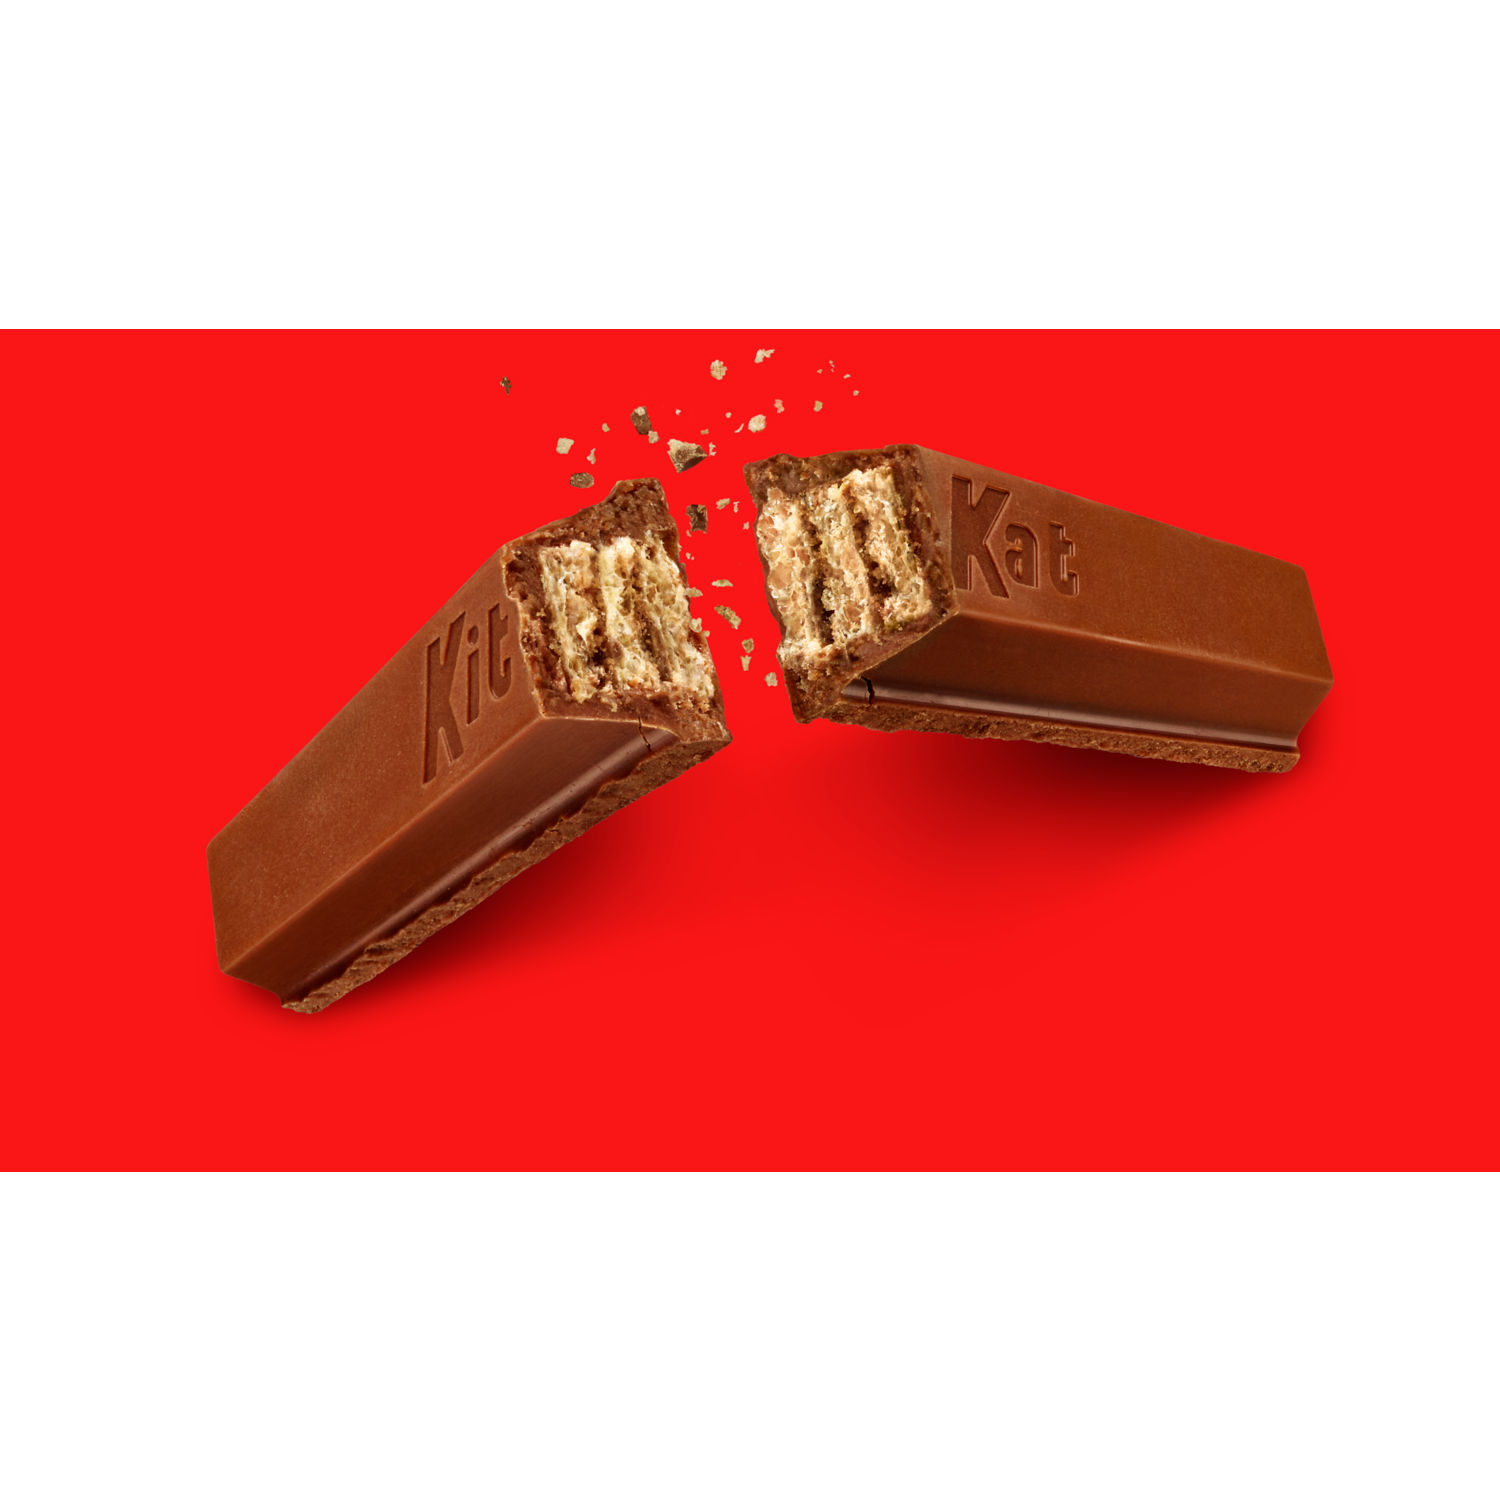 Kit Kat King Size 3 Oz. Crispy Chocolate Candy Bar - Power Townsend Company